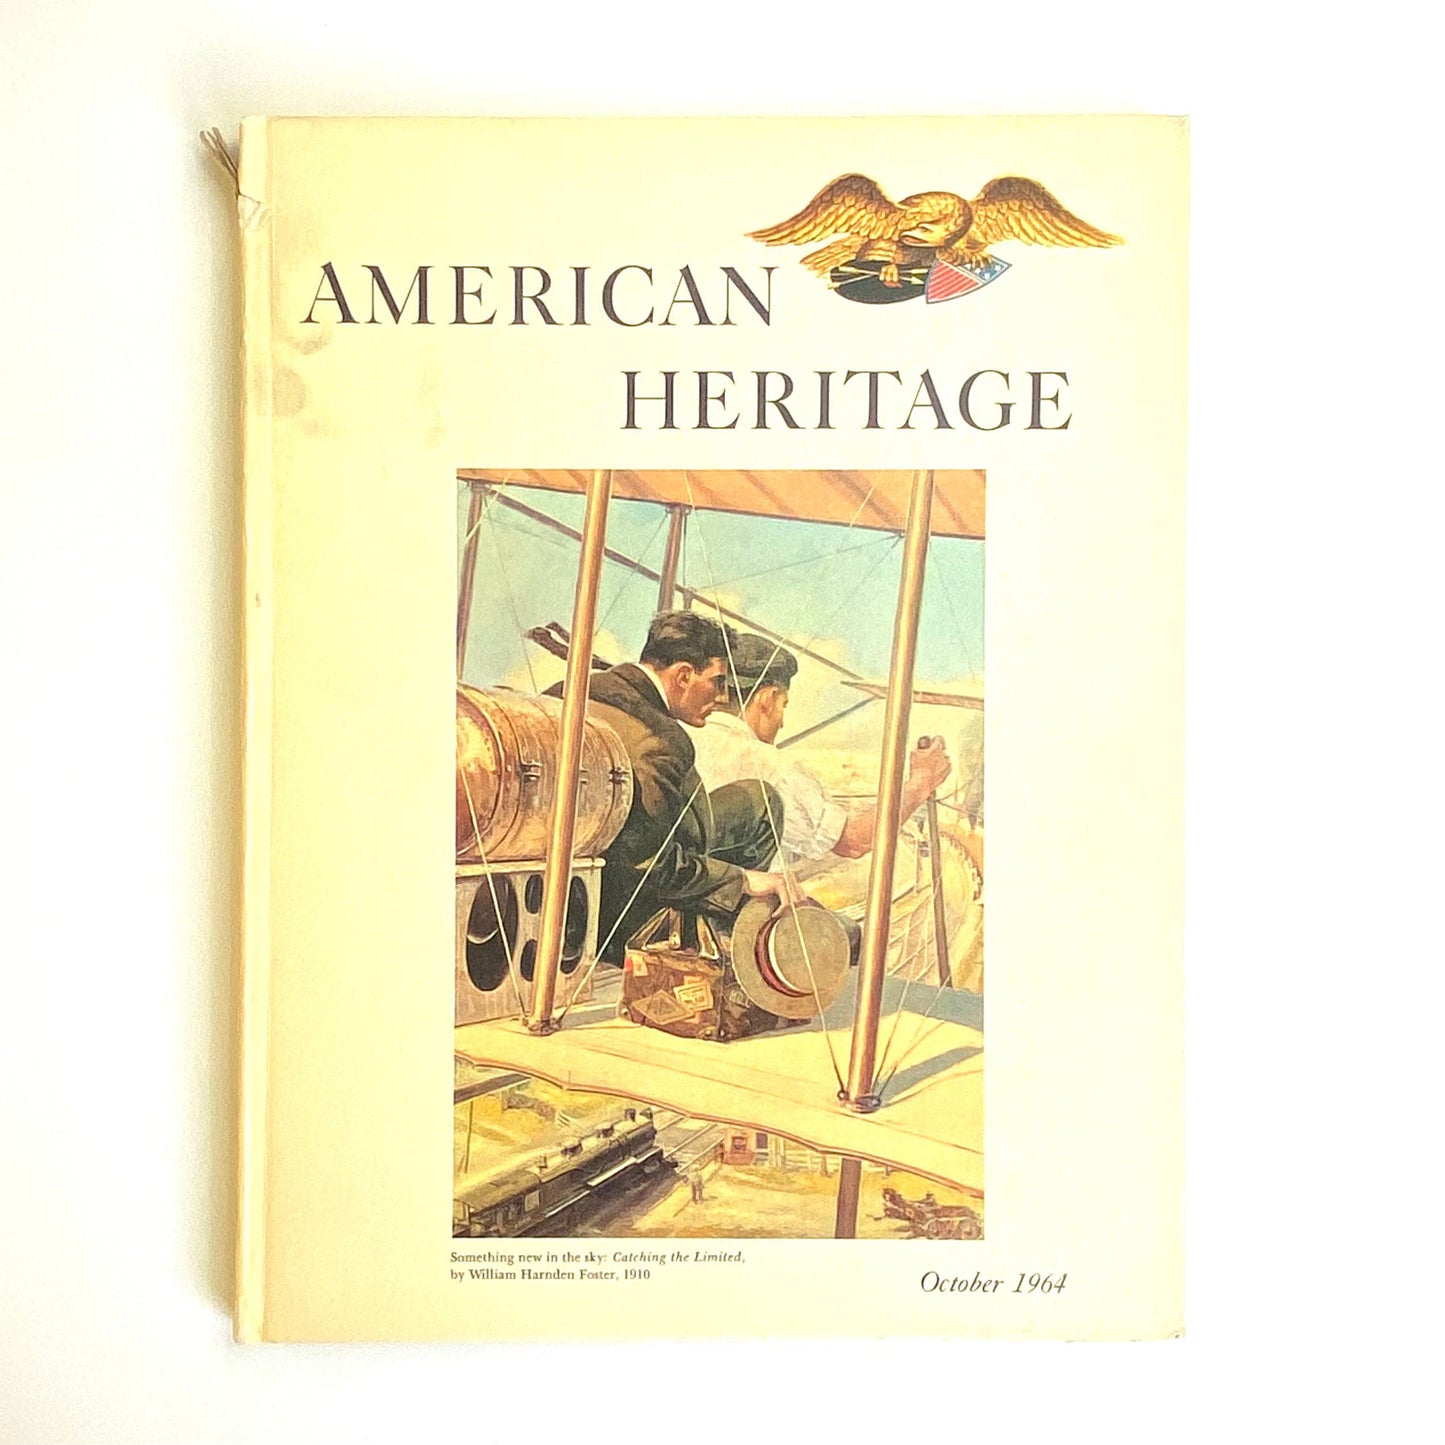 Vintage American Heritage October 1964 • Volume XV, Number 6 Hardcover History Book